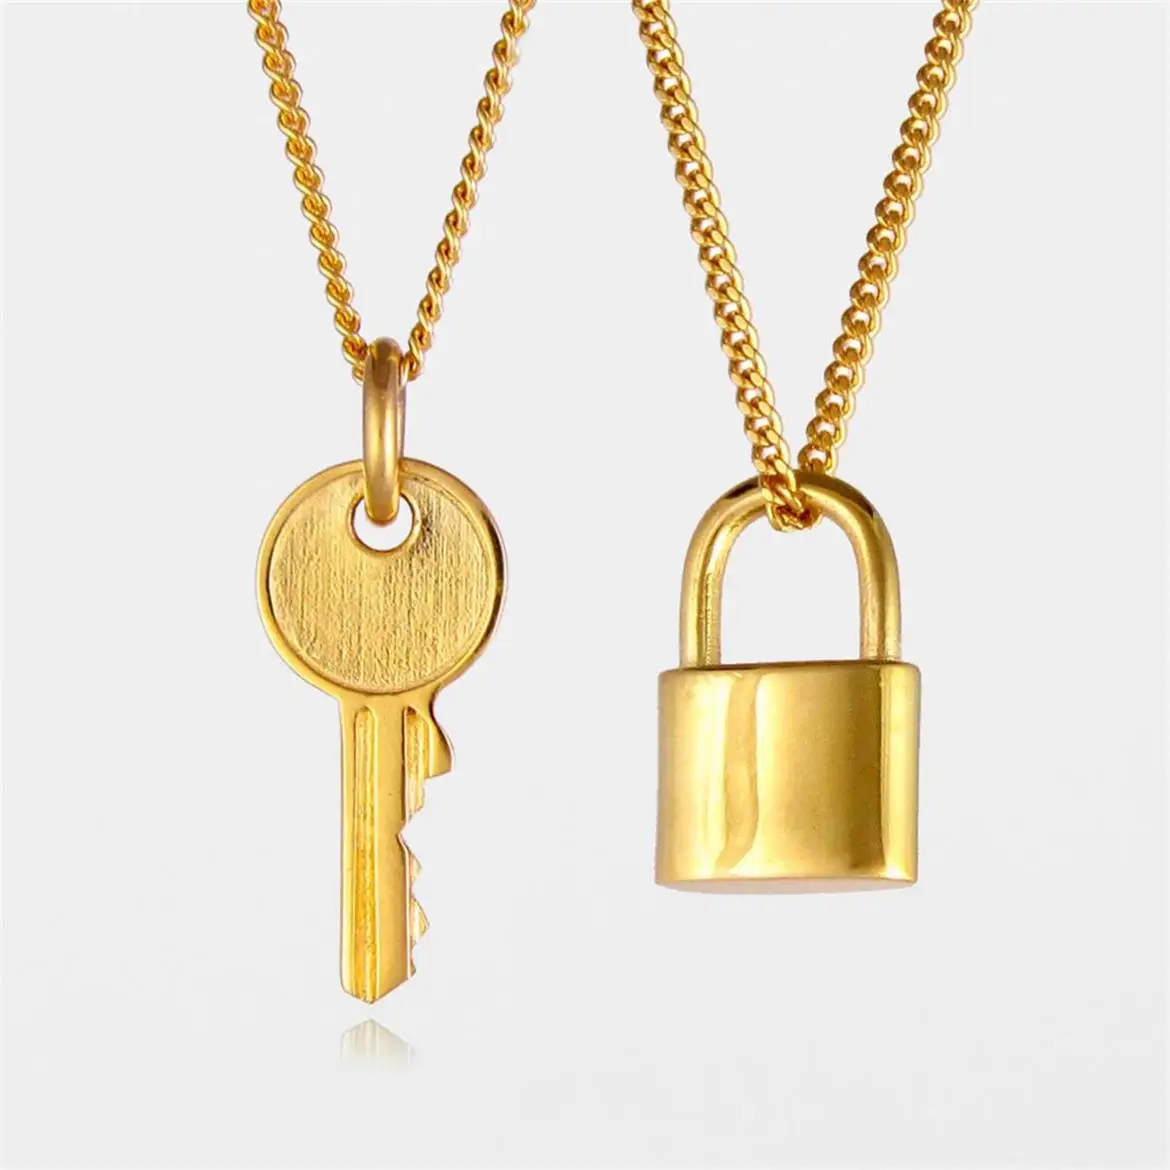 Wholesale Best Seller Lock Key Pendant Necklace Statement Long